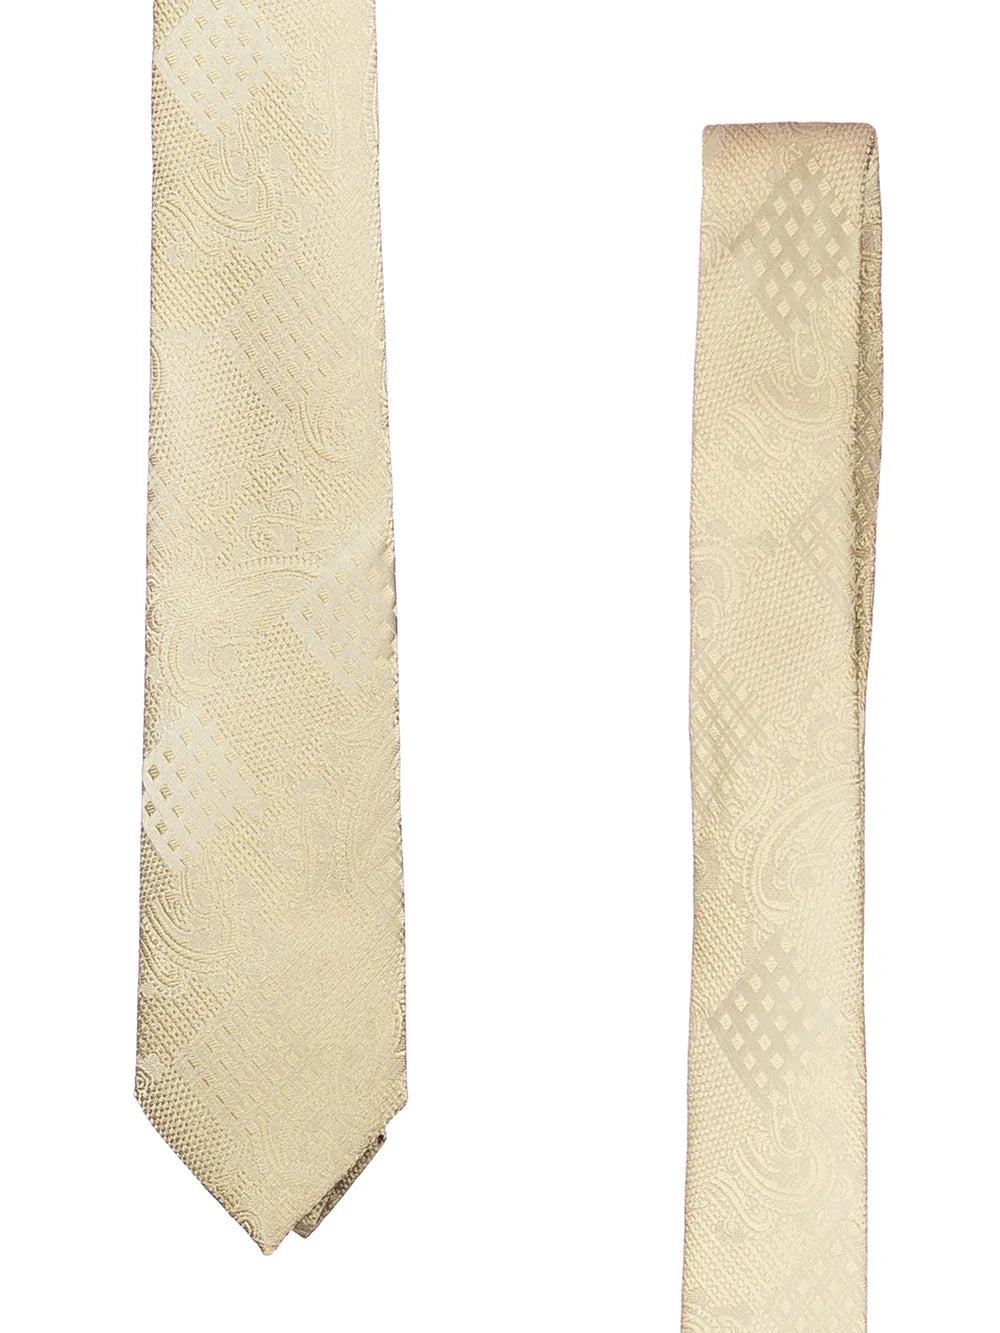 Cravatta dorata